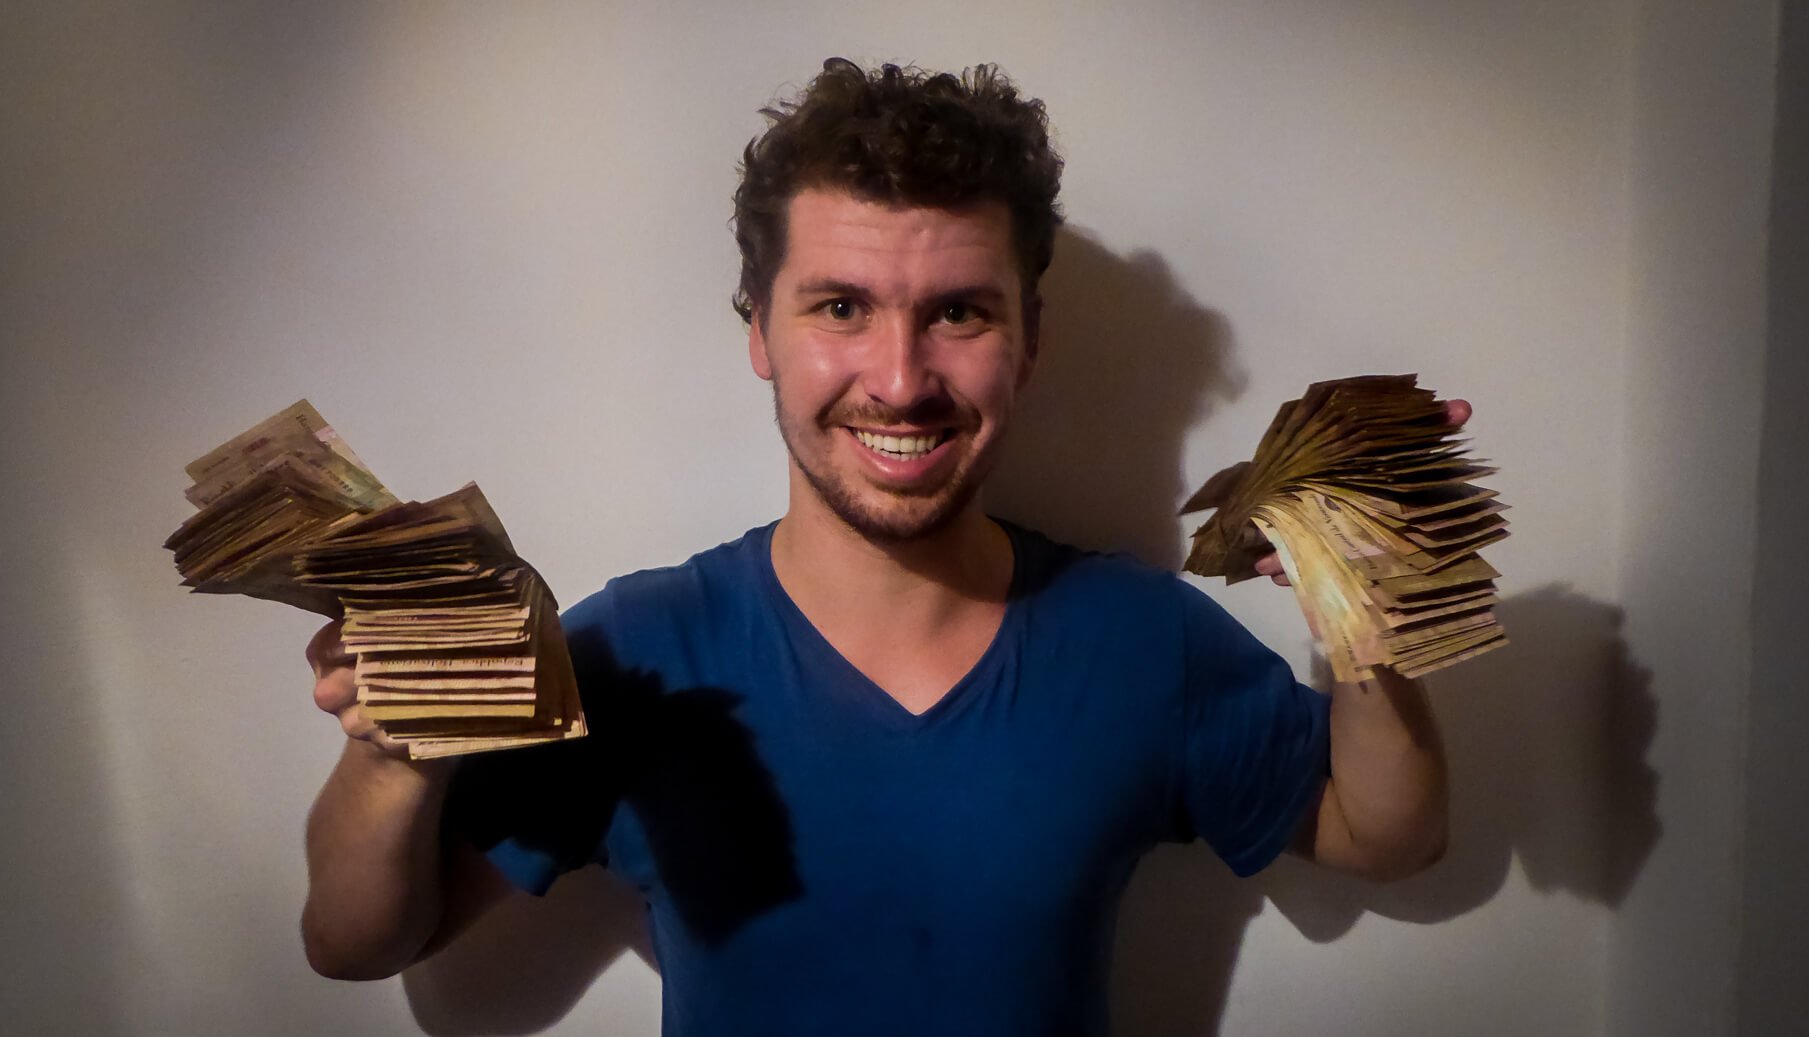 will hatton holding a pile of cash in venezuela